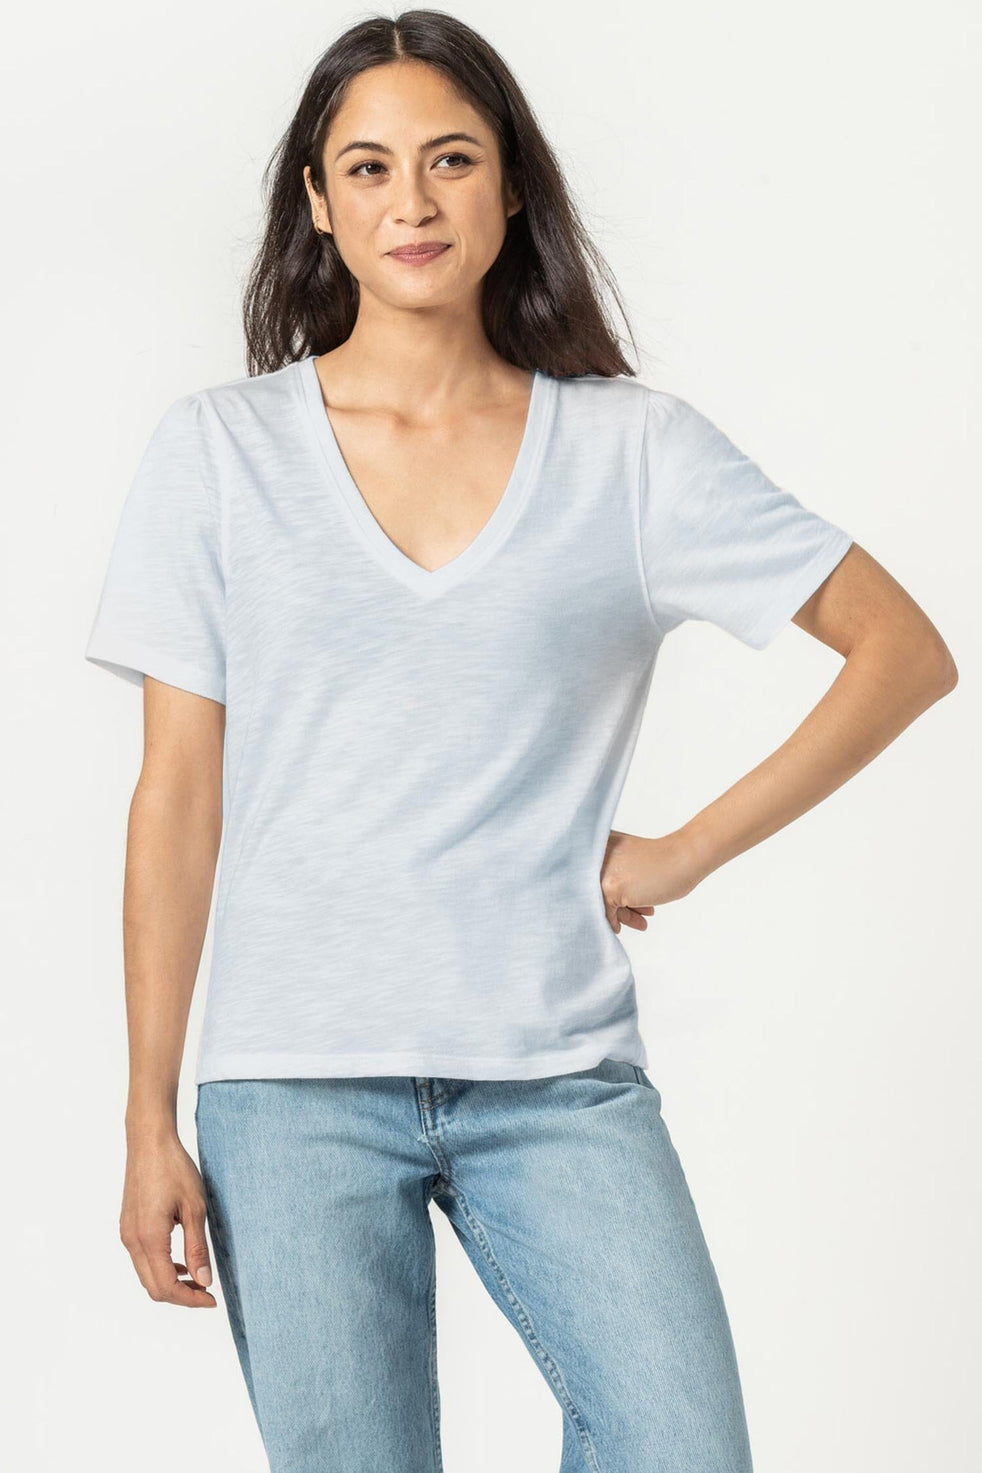 Women\'s Tops on Sale | Short & Long Sleeve Cotton Shirts for Women